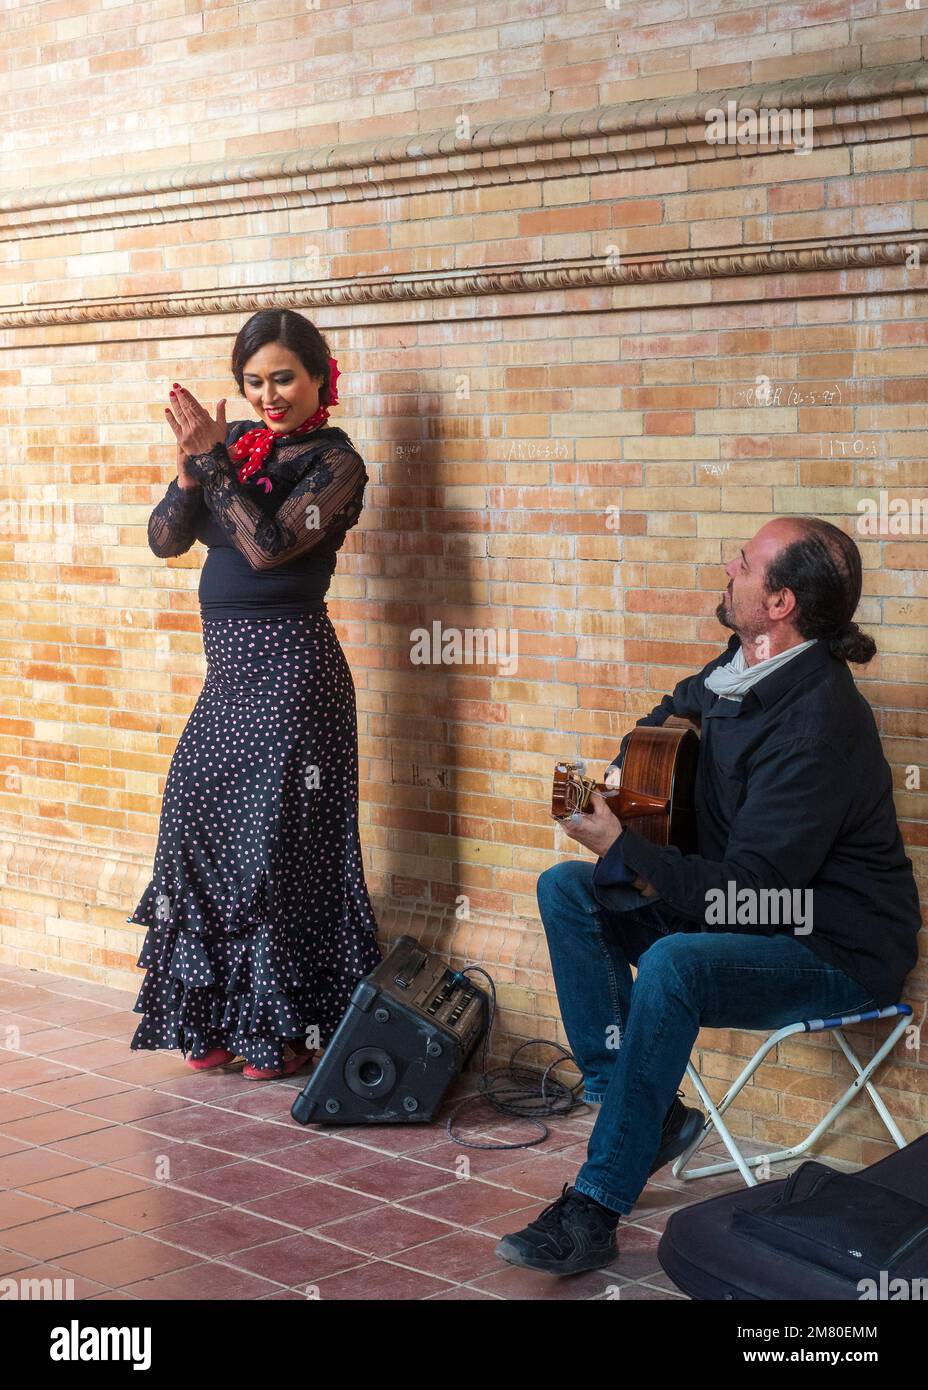 Flamenco guitarist and flamenco dancer performing in the Plaza de España in Seville. Stock Photo